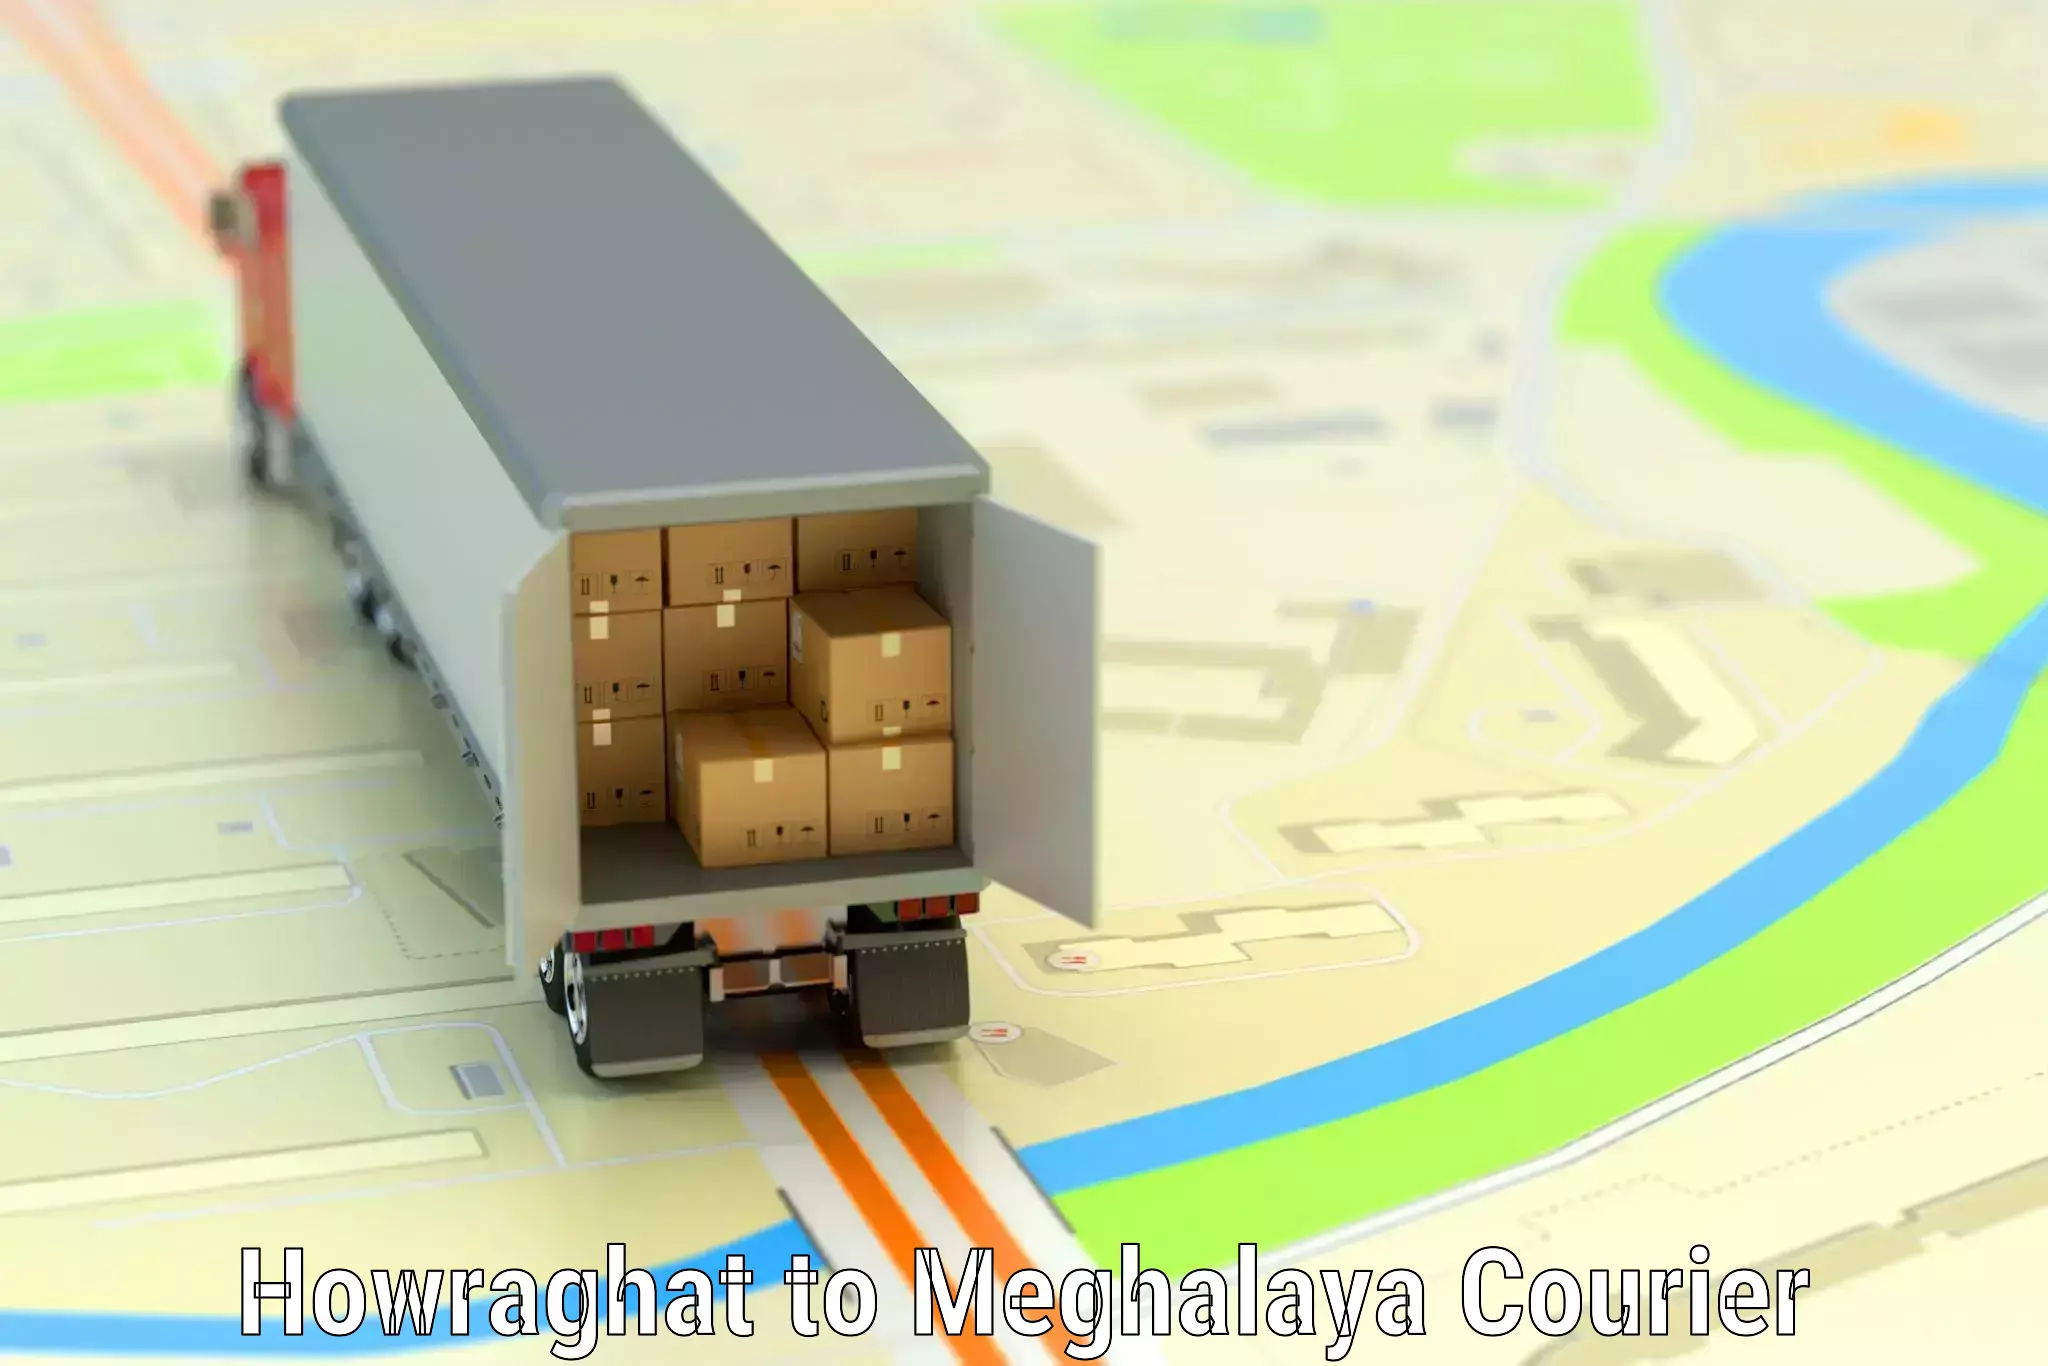 Global baggage shipping Howraghat to Meghalaya